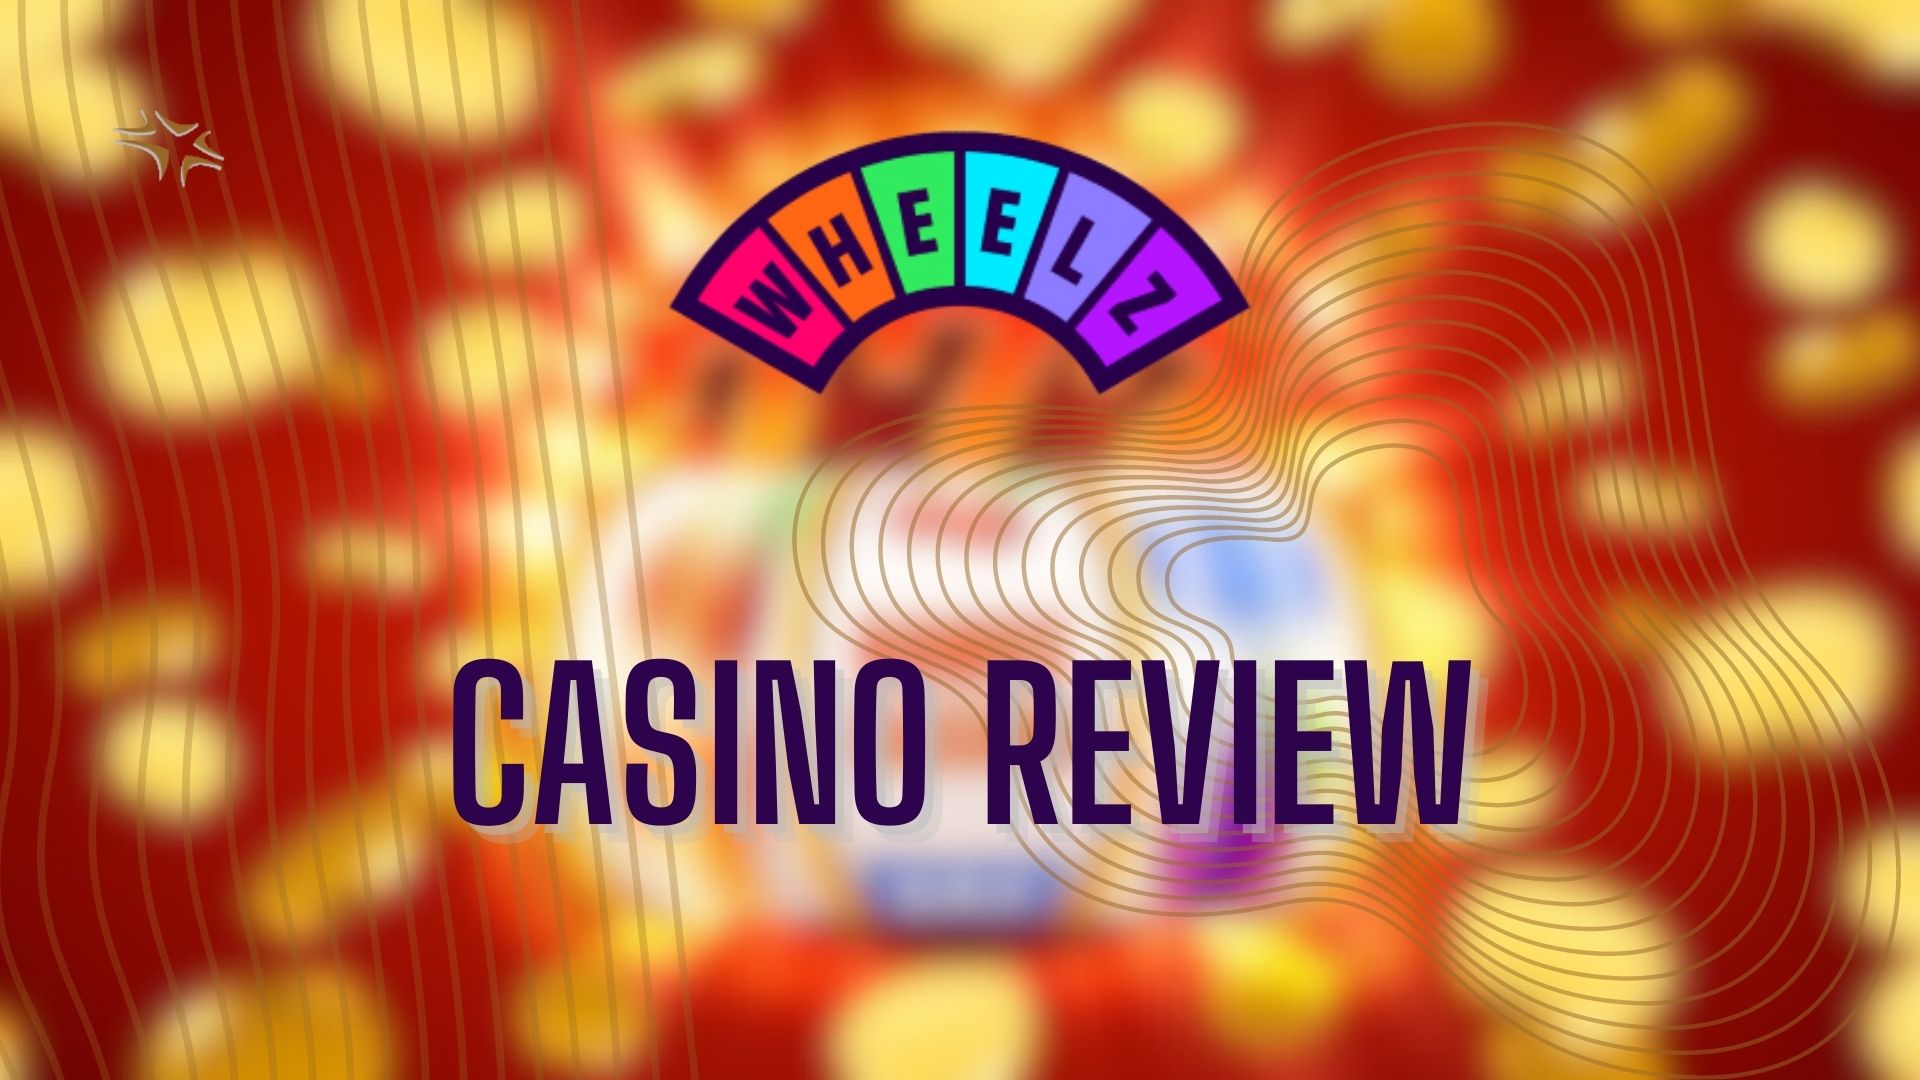 Review of Wheelz Casino